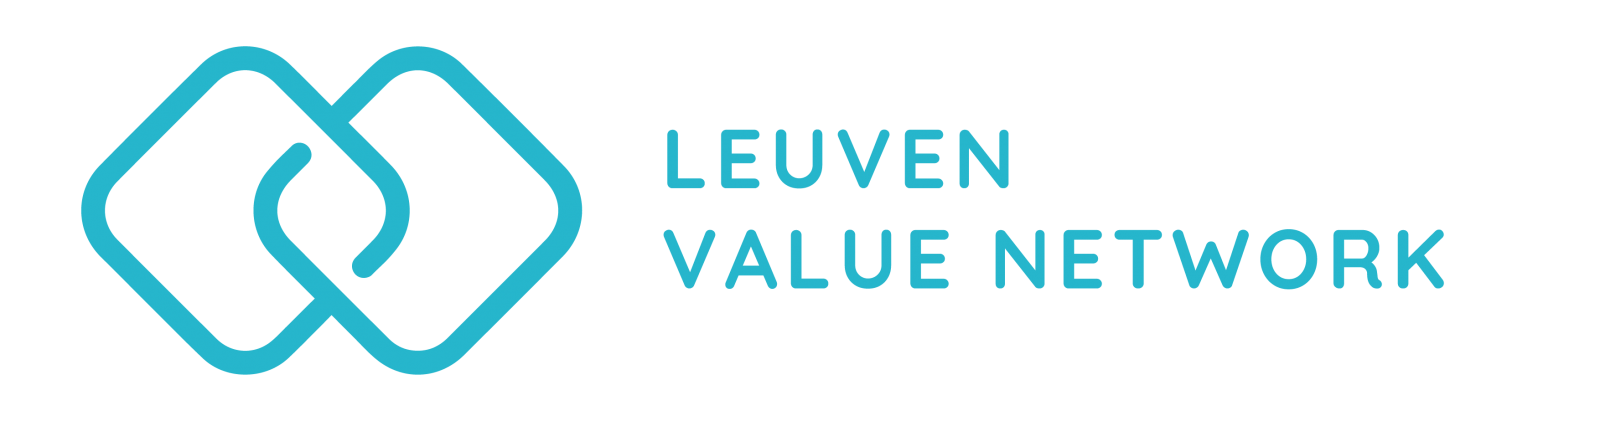 Leuven Value Network 